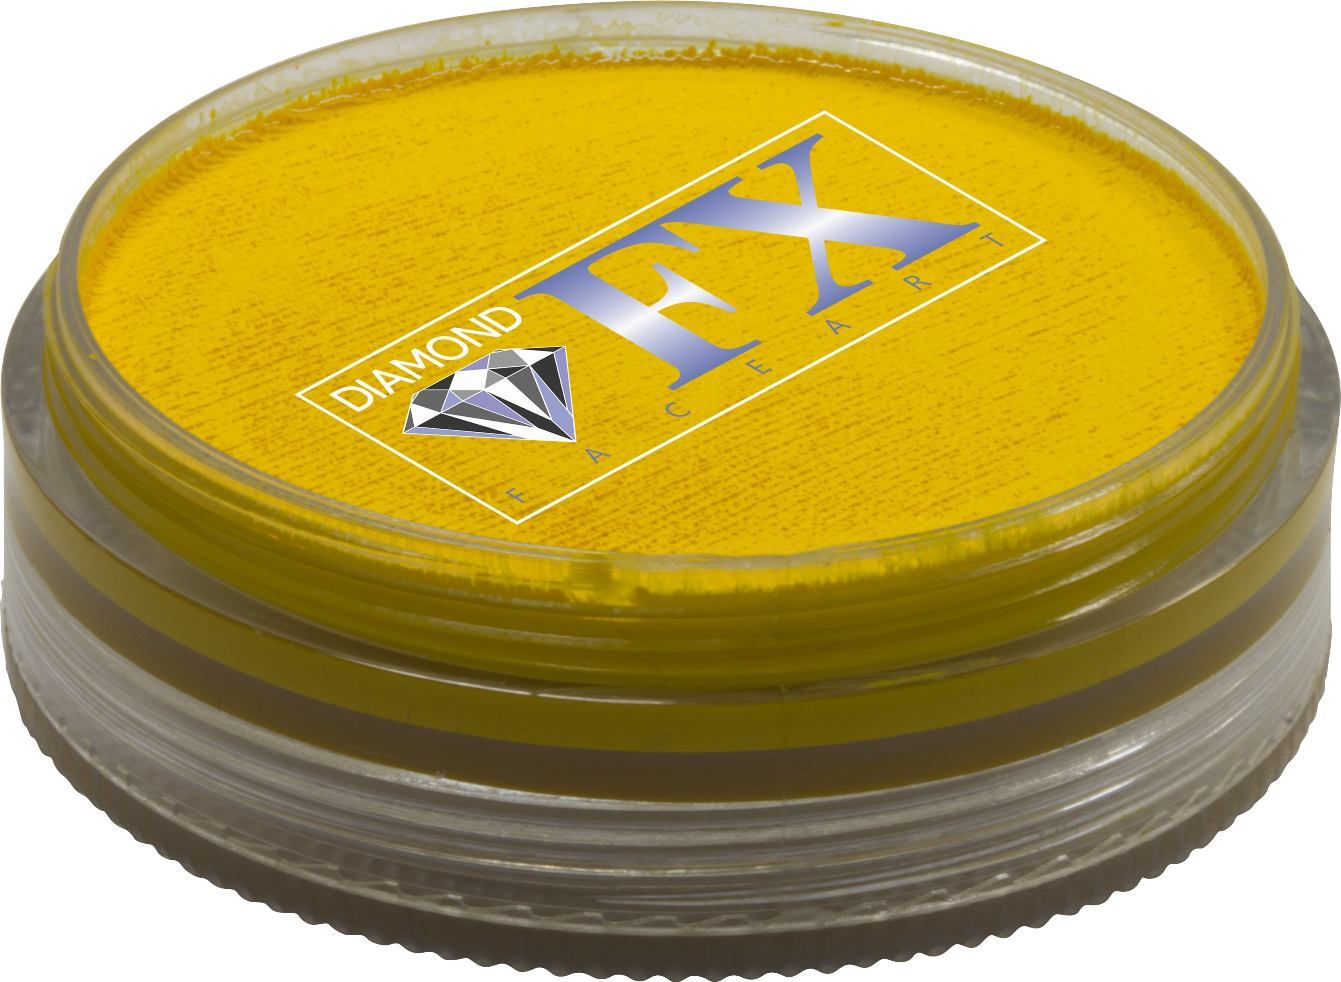 Diamond FX Yellow 45g - Small Image